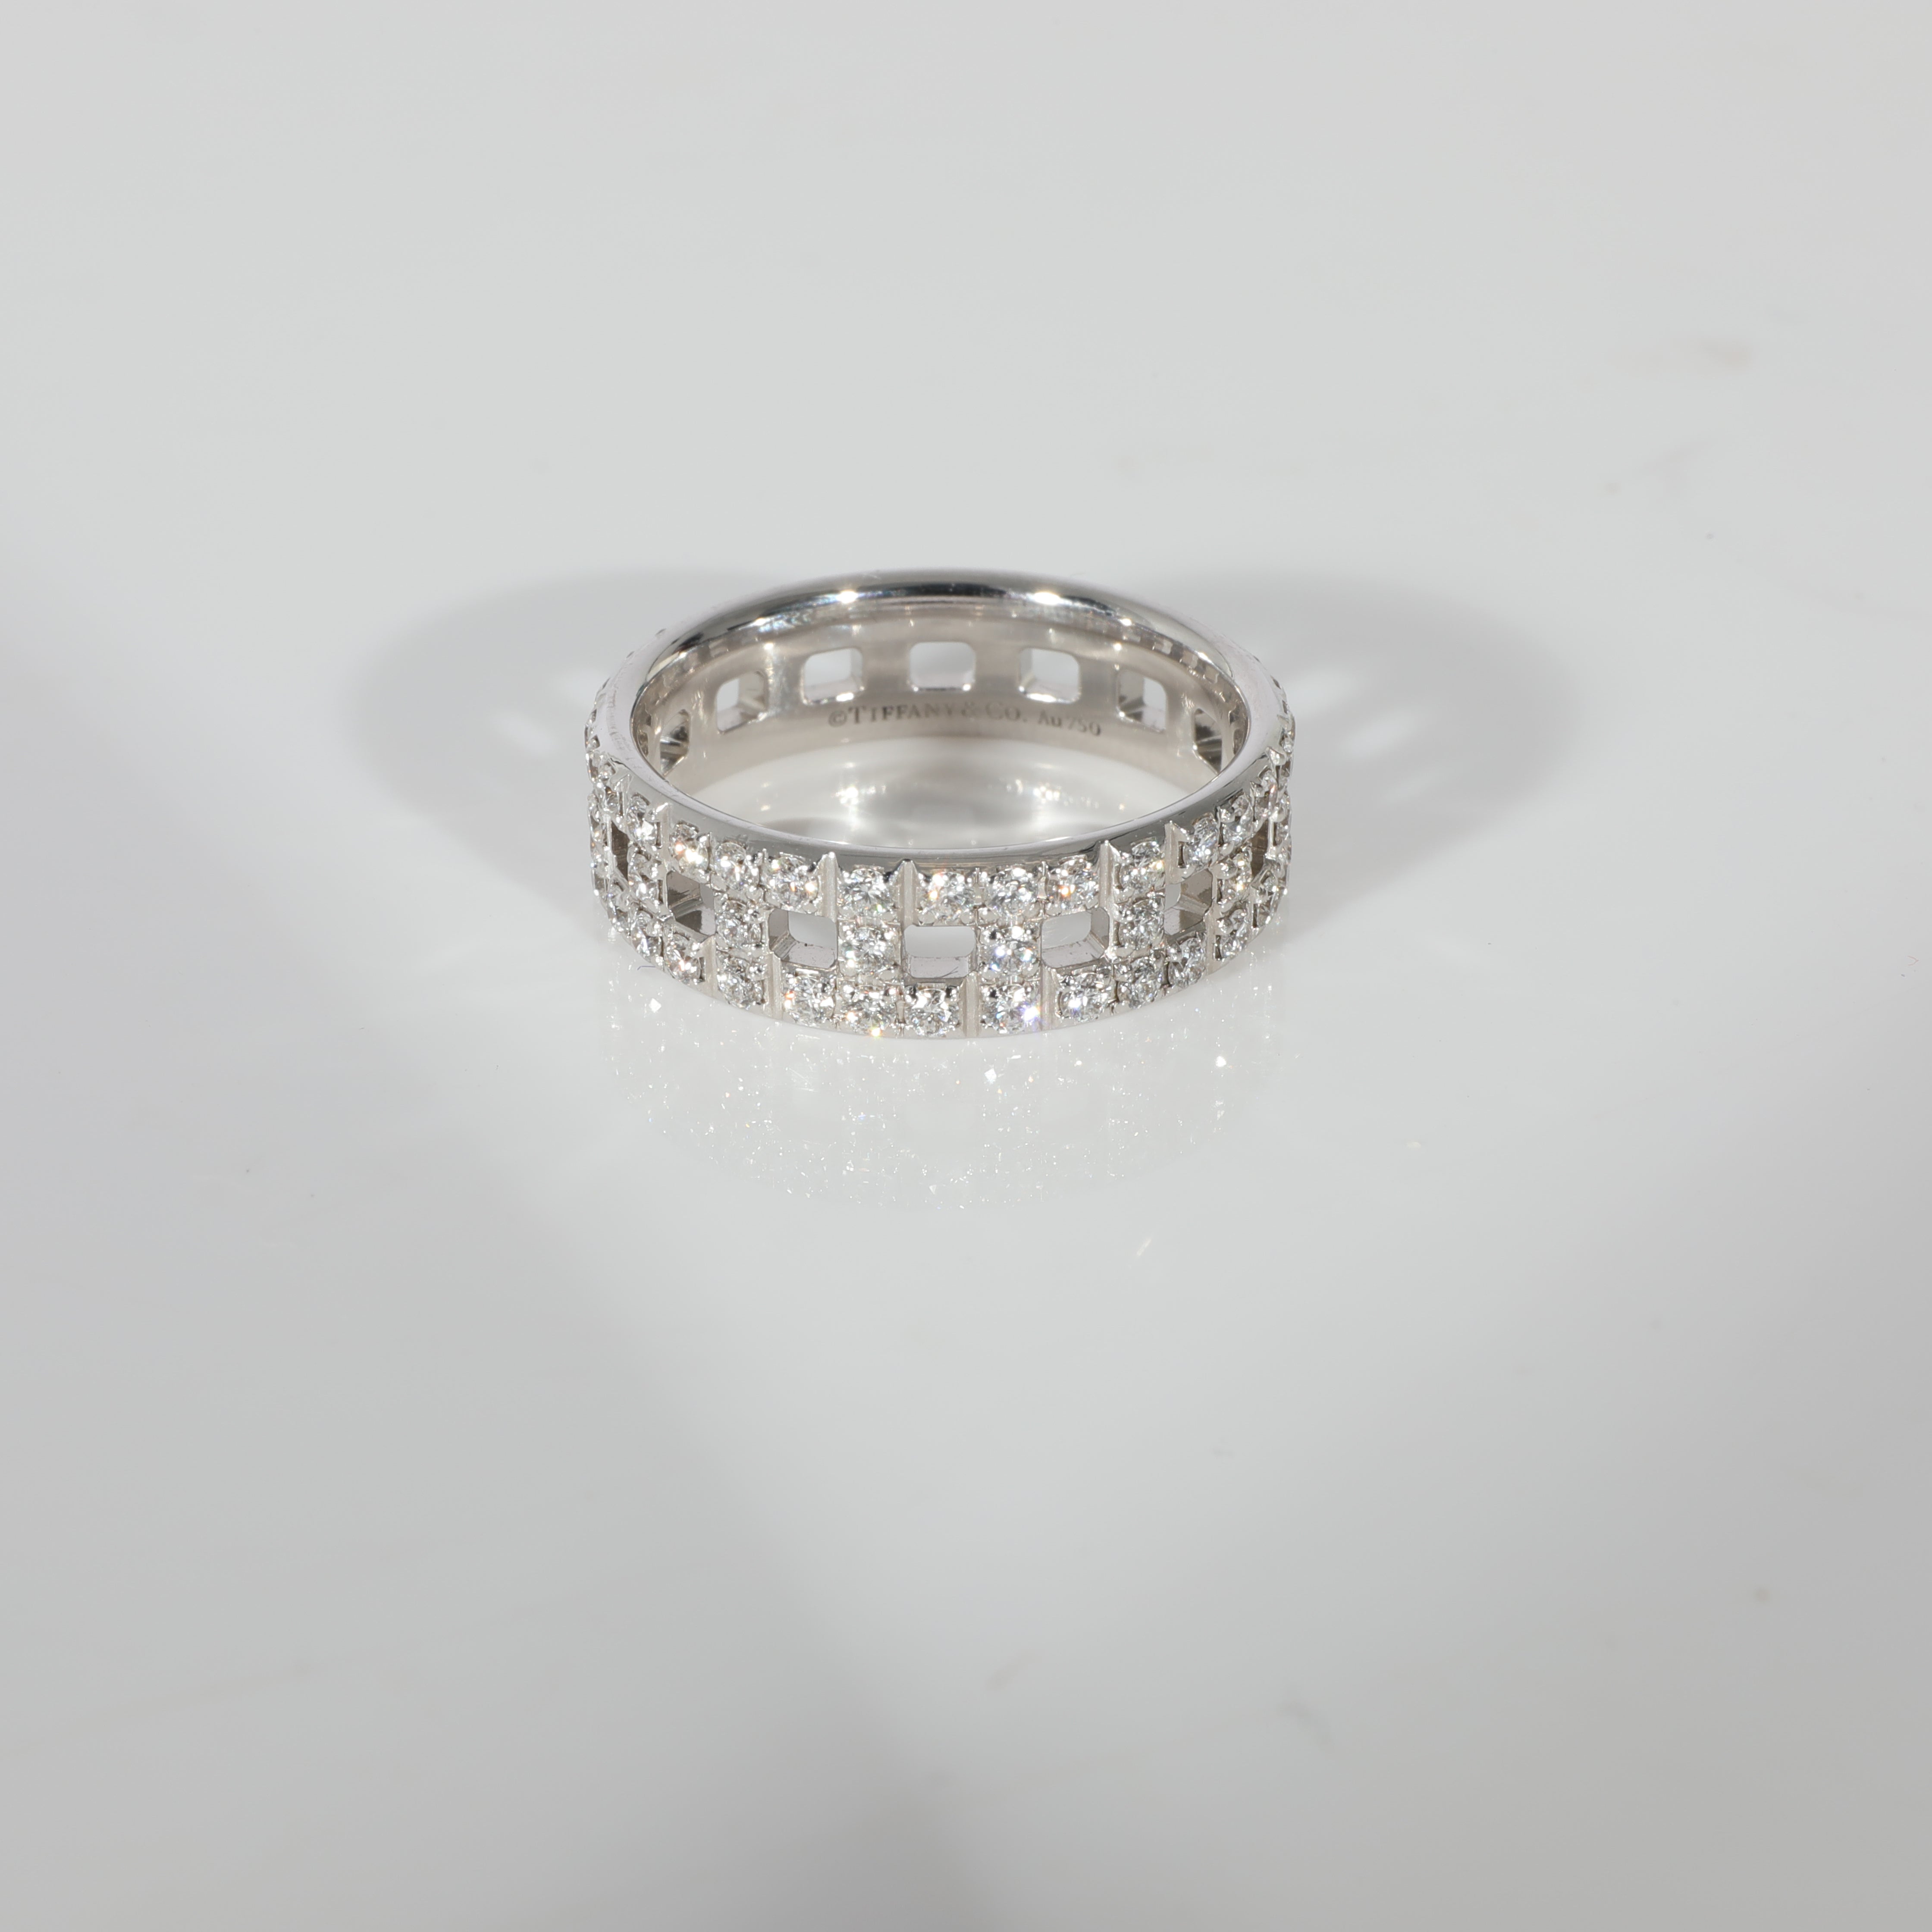 Tiffany Engagement Rings: Fantastic Ring Ideas | Tiffany engagement ring, Tiffany  engagement, Tiffany rings